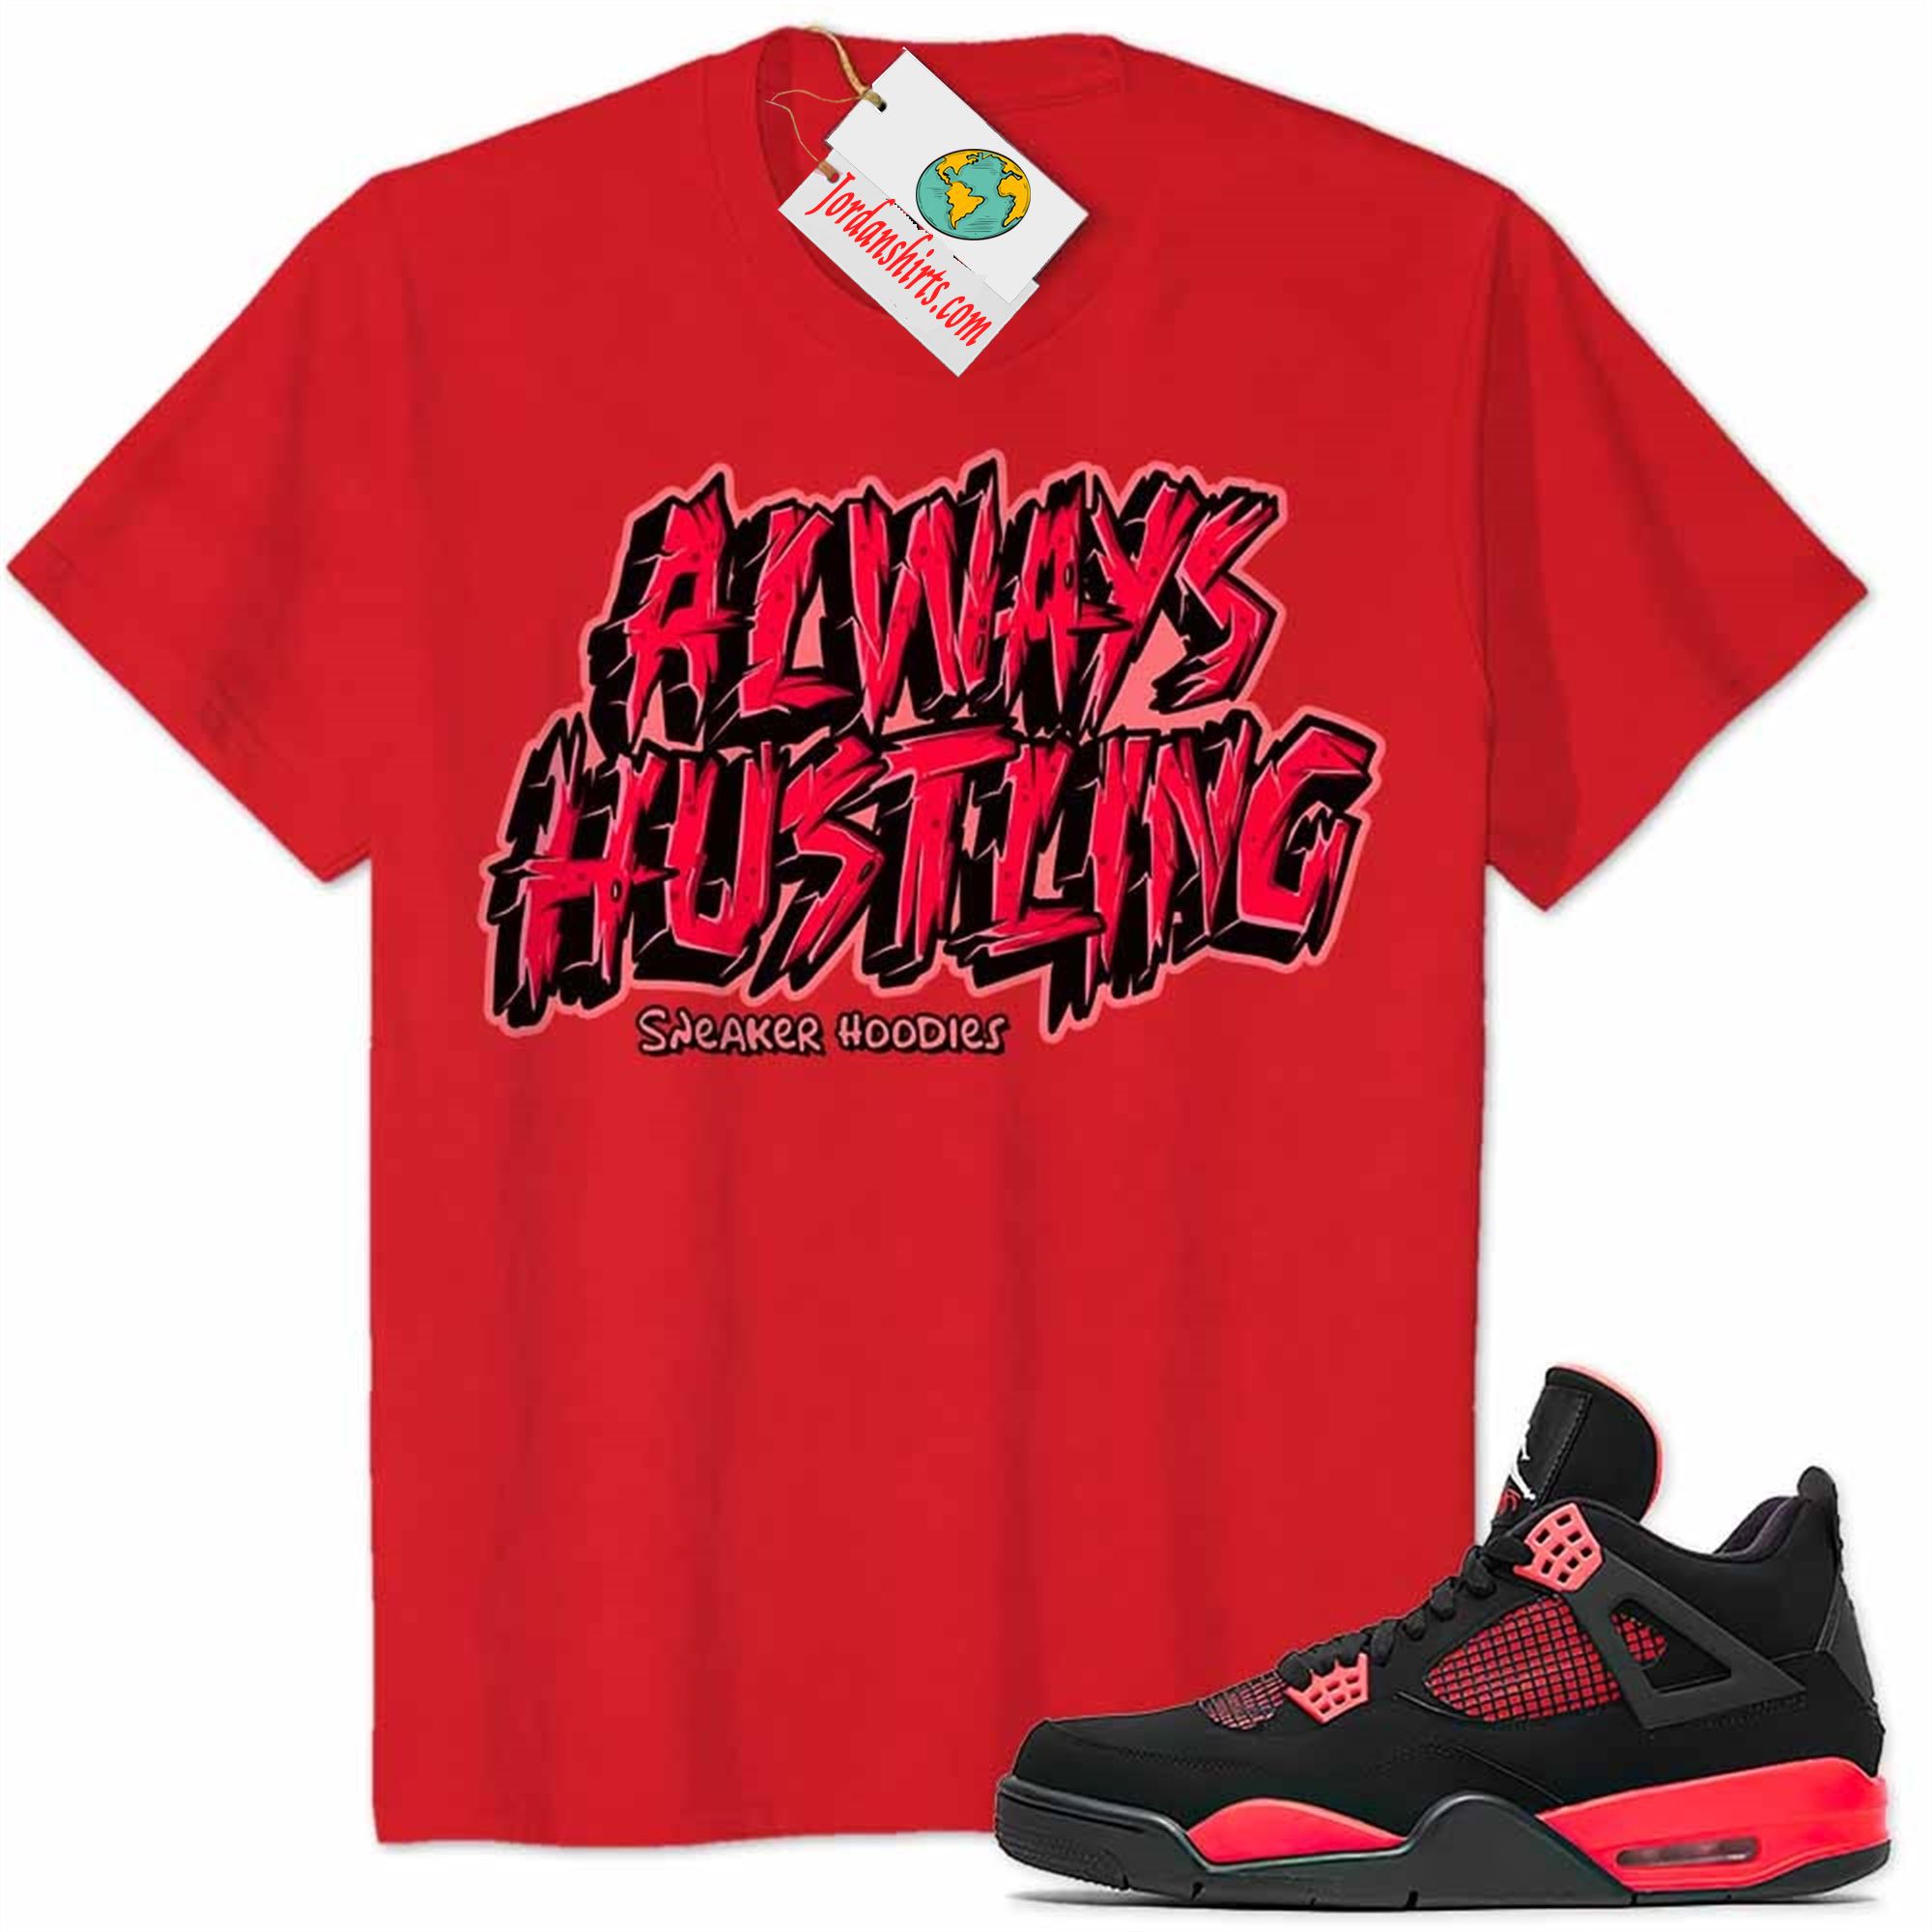 Jordan 4 Shirt, Allway Hustling Hustle Red Air Jordan 4 Red Thunder 4s Plus Size Up To 5xl